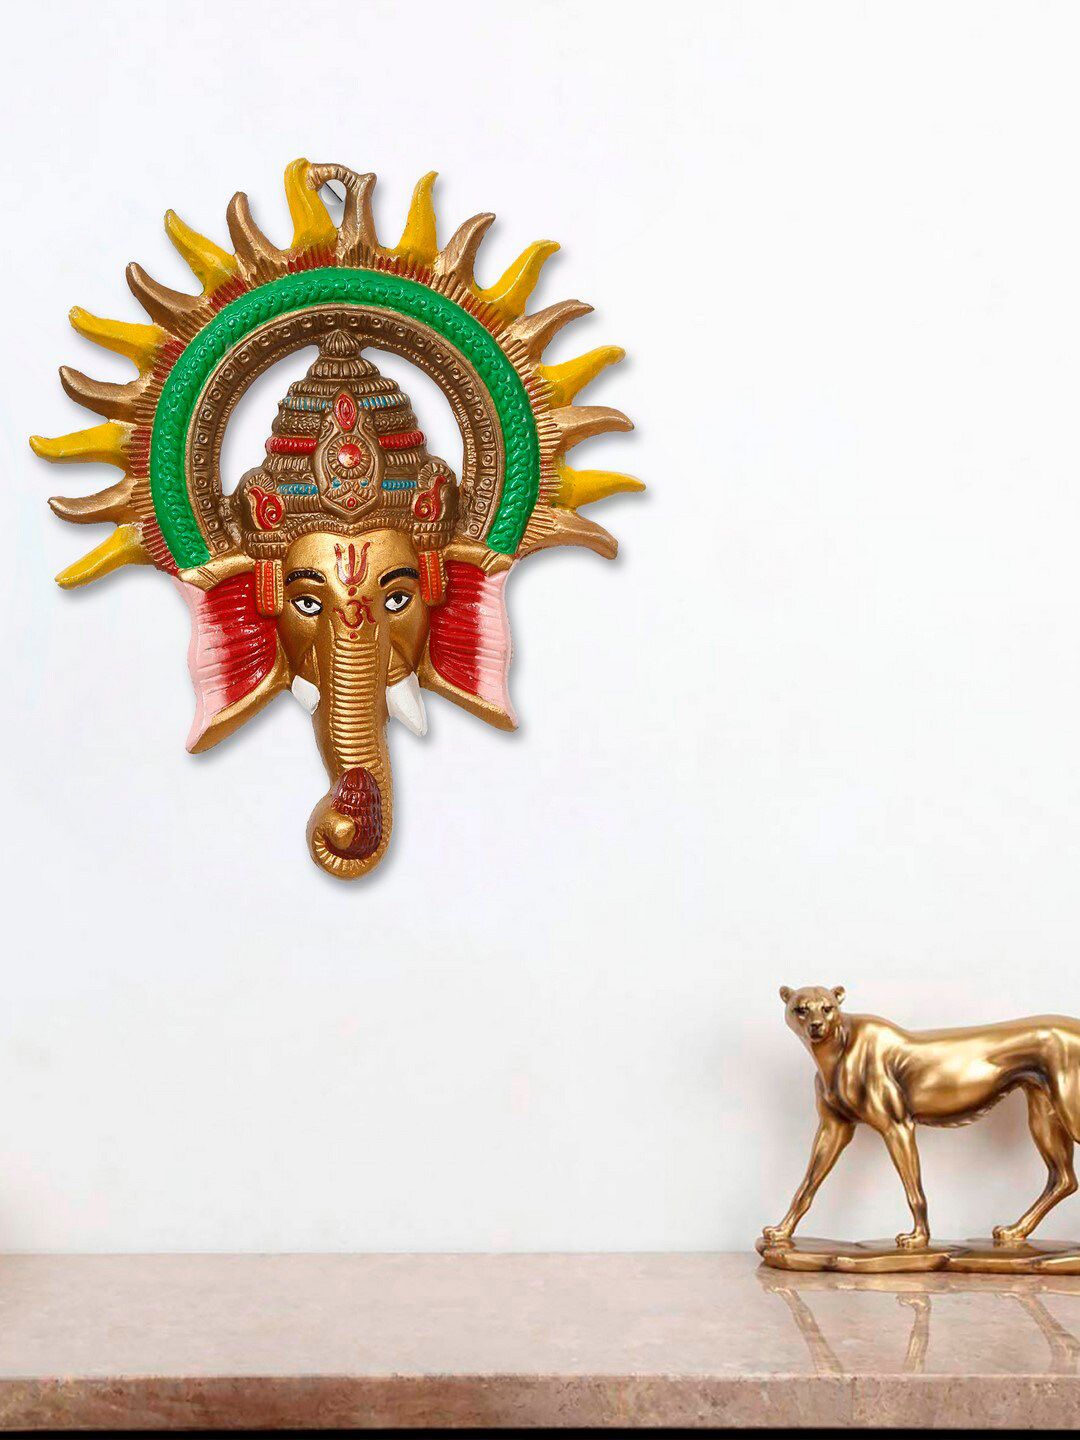 eCraftIndia Gold-Toned & Green Metal Lord Ganesha Decorative Wall Hanging Price in India